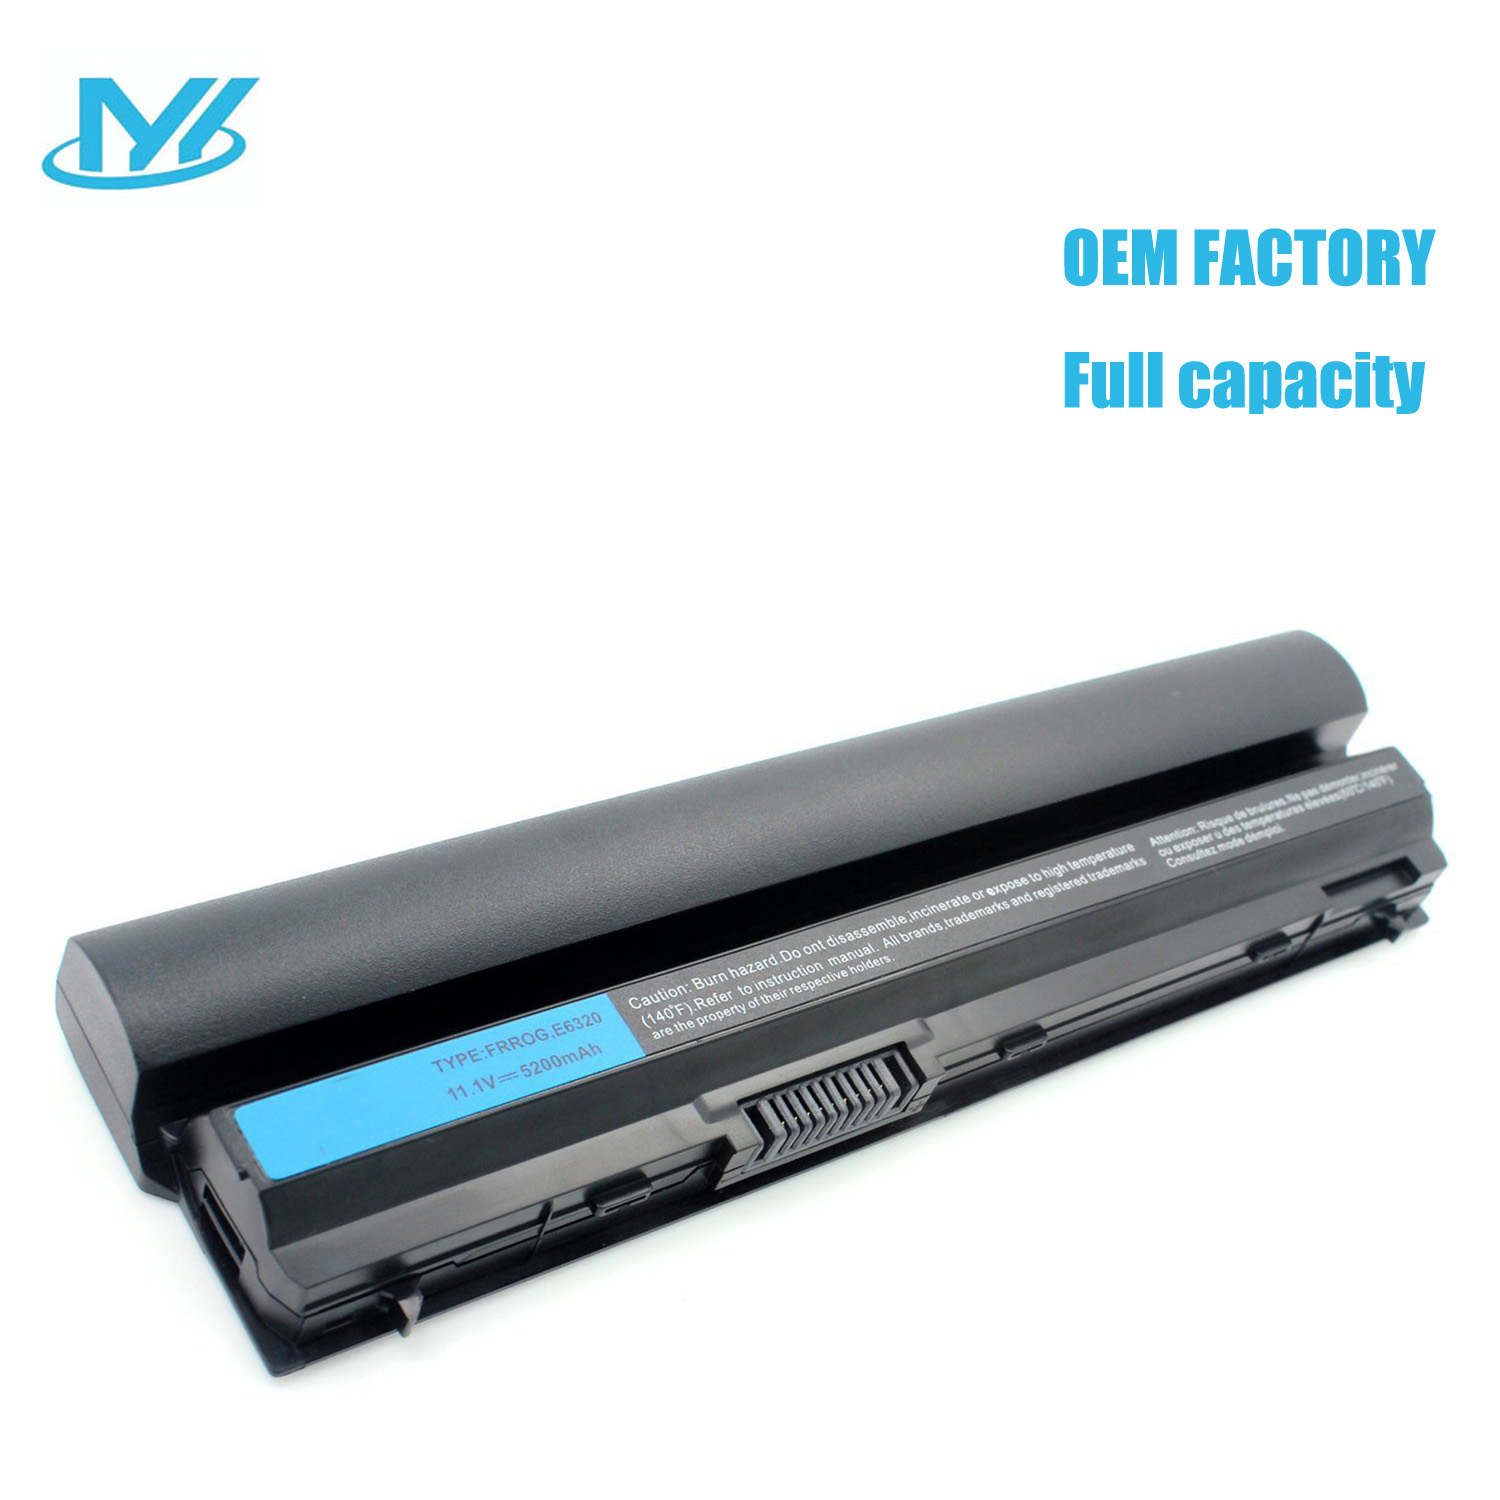 FRROG 09K6P 9GXD5 MHPKF 0F7W7V laptop battery lithium ion batteries 11.1V 5200mAh Battery For Dell Latitude E6230 E6320 E6430S E6120 E6330 Series